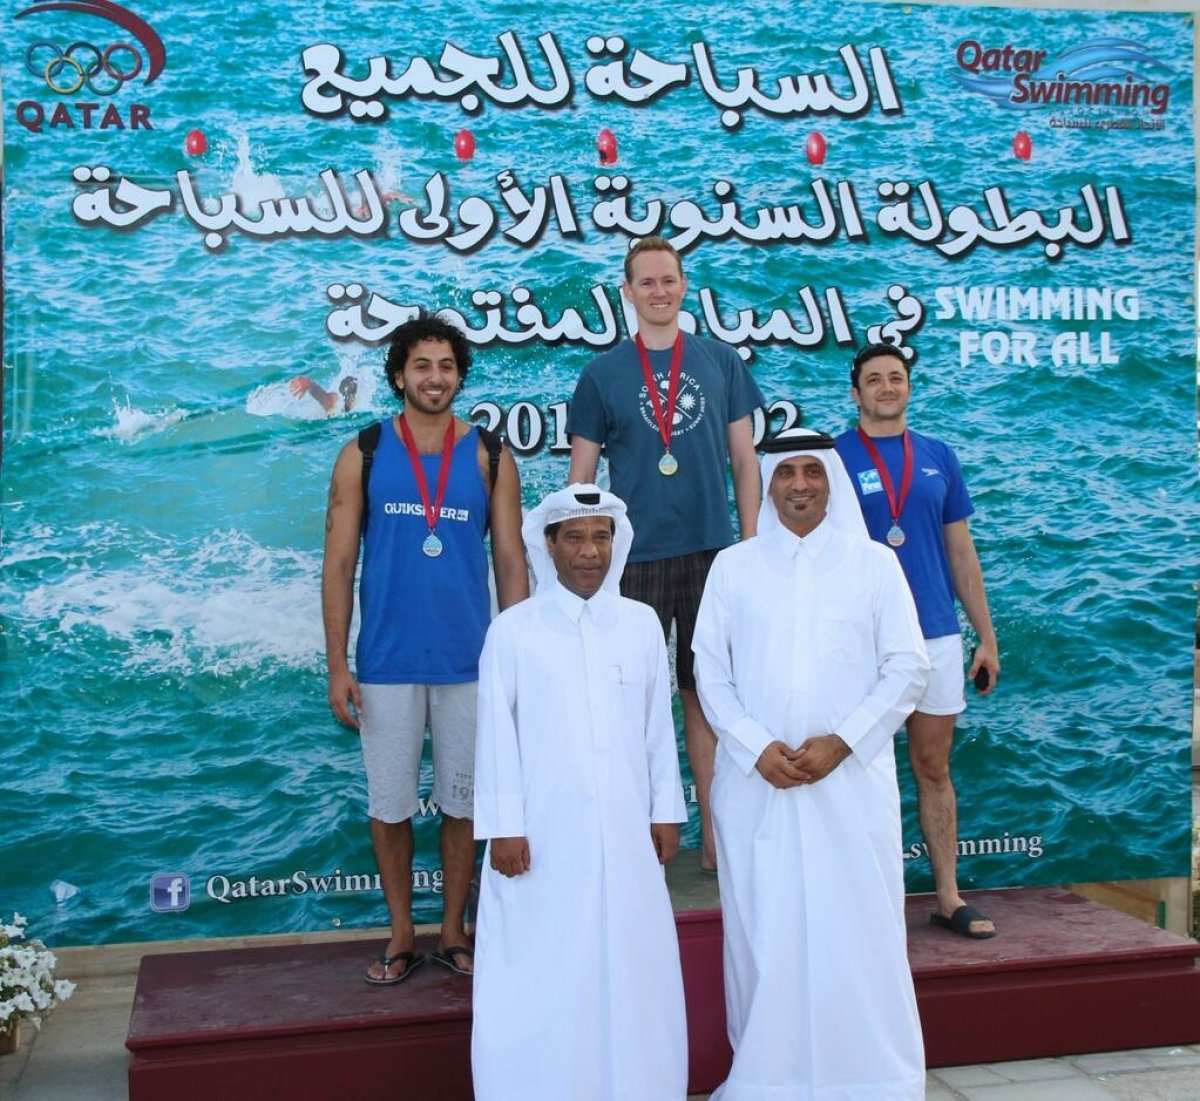 Qatar Open Water Swimming champion 2014